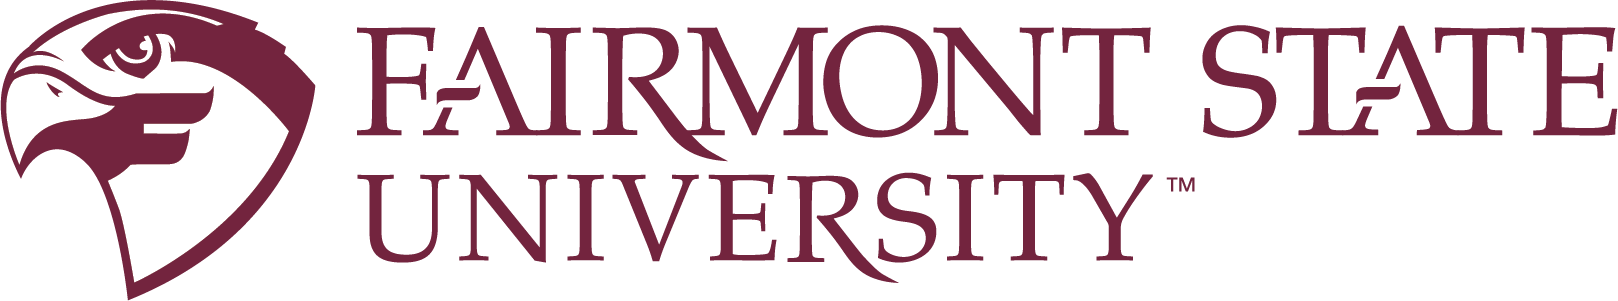 Fairmont State Logo - University Brand. About Fairmont State University